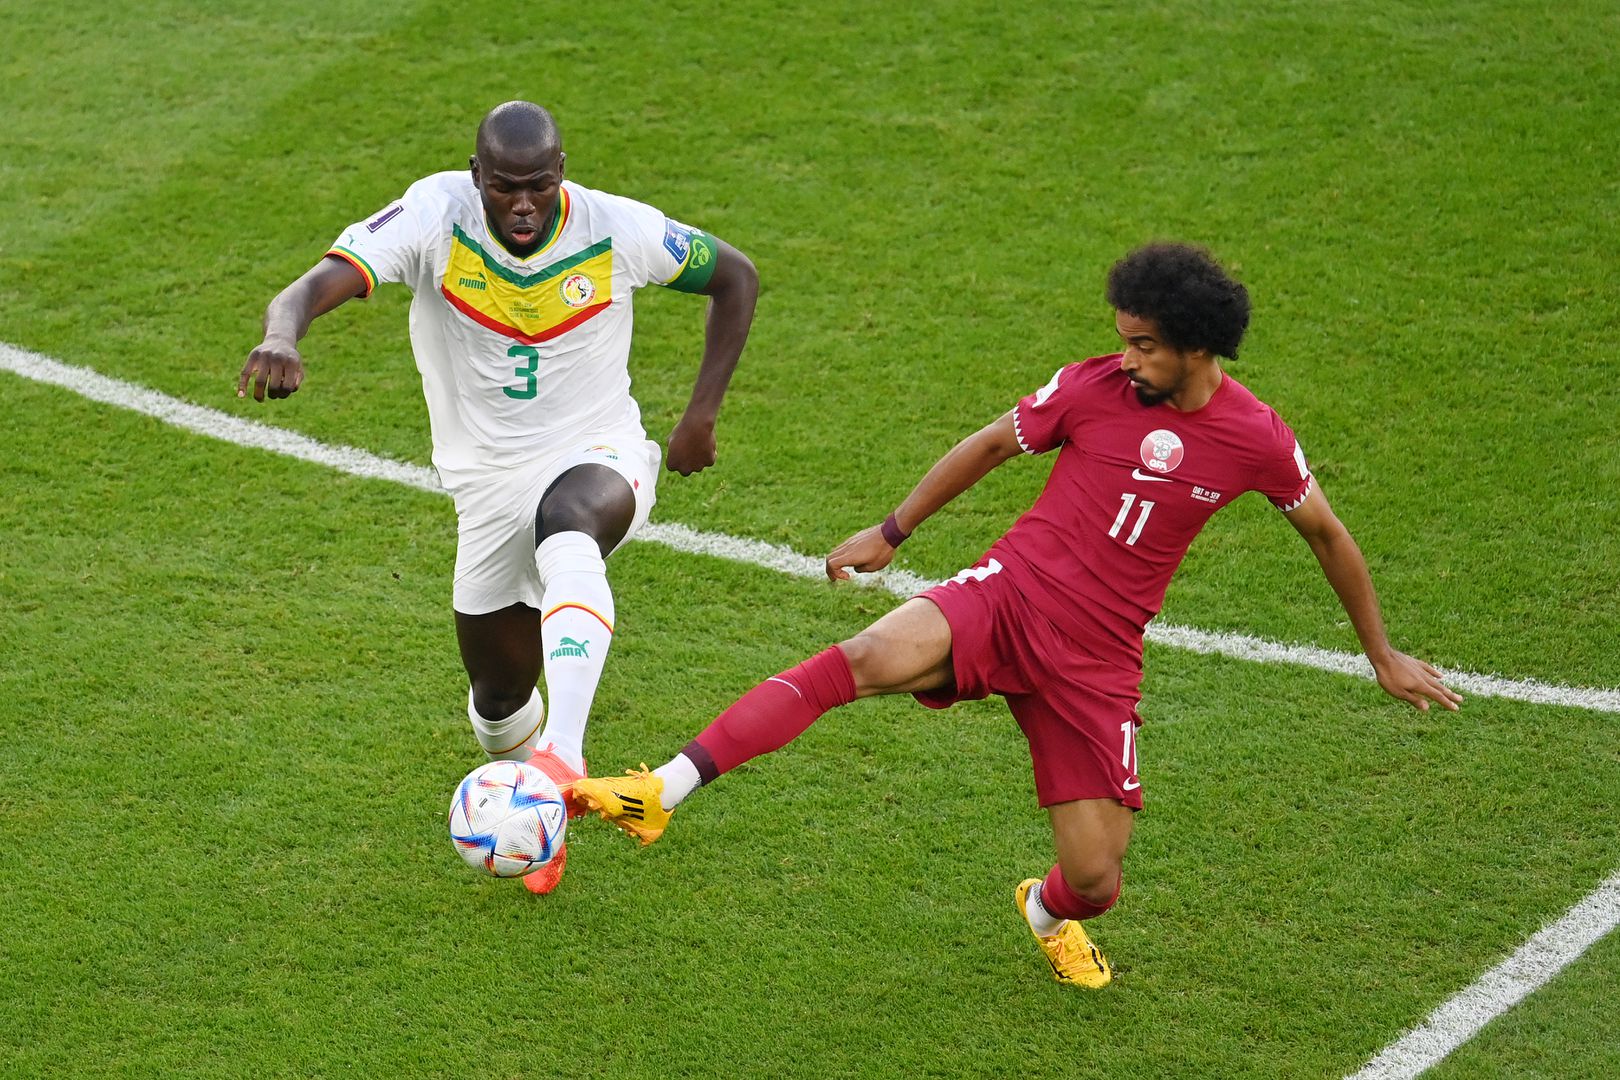 Катар - Сенегал 1:3, група "А"